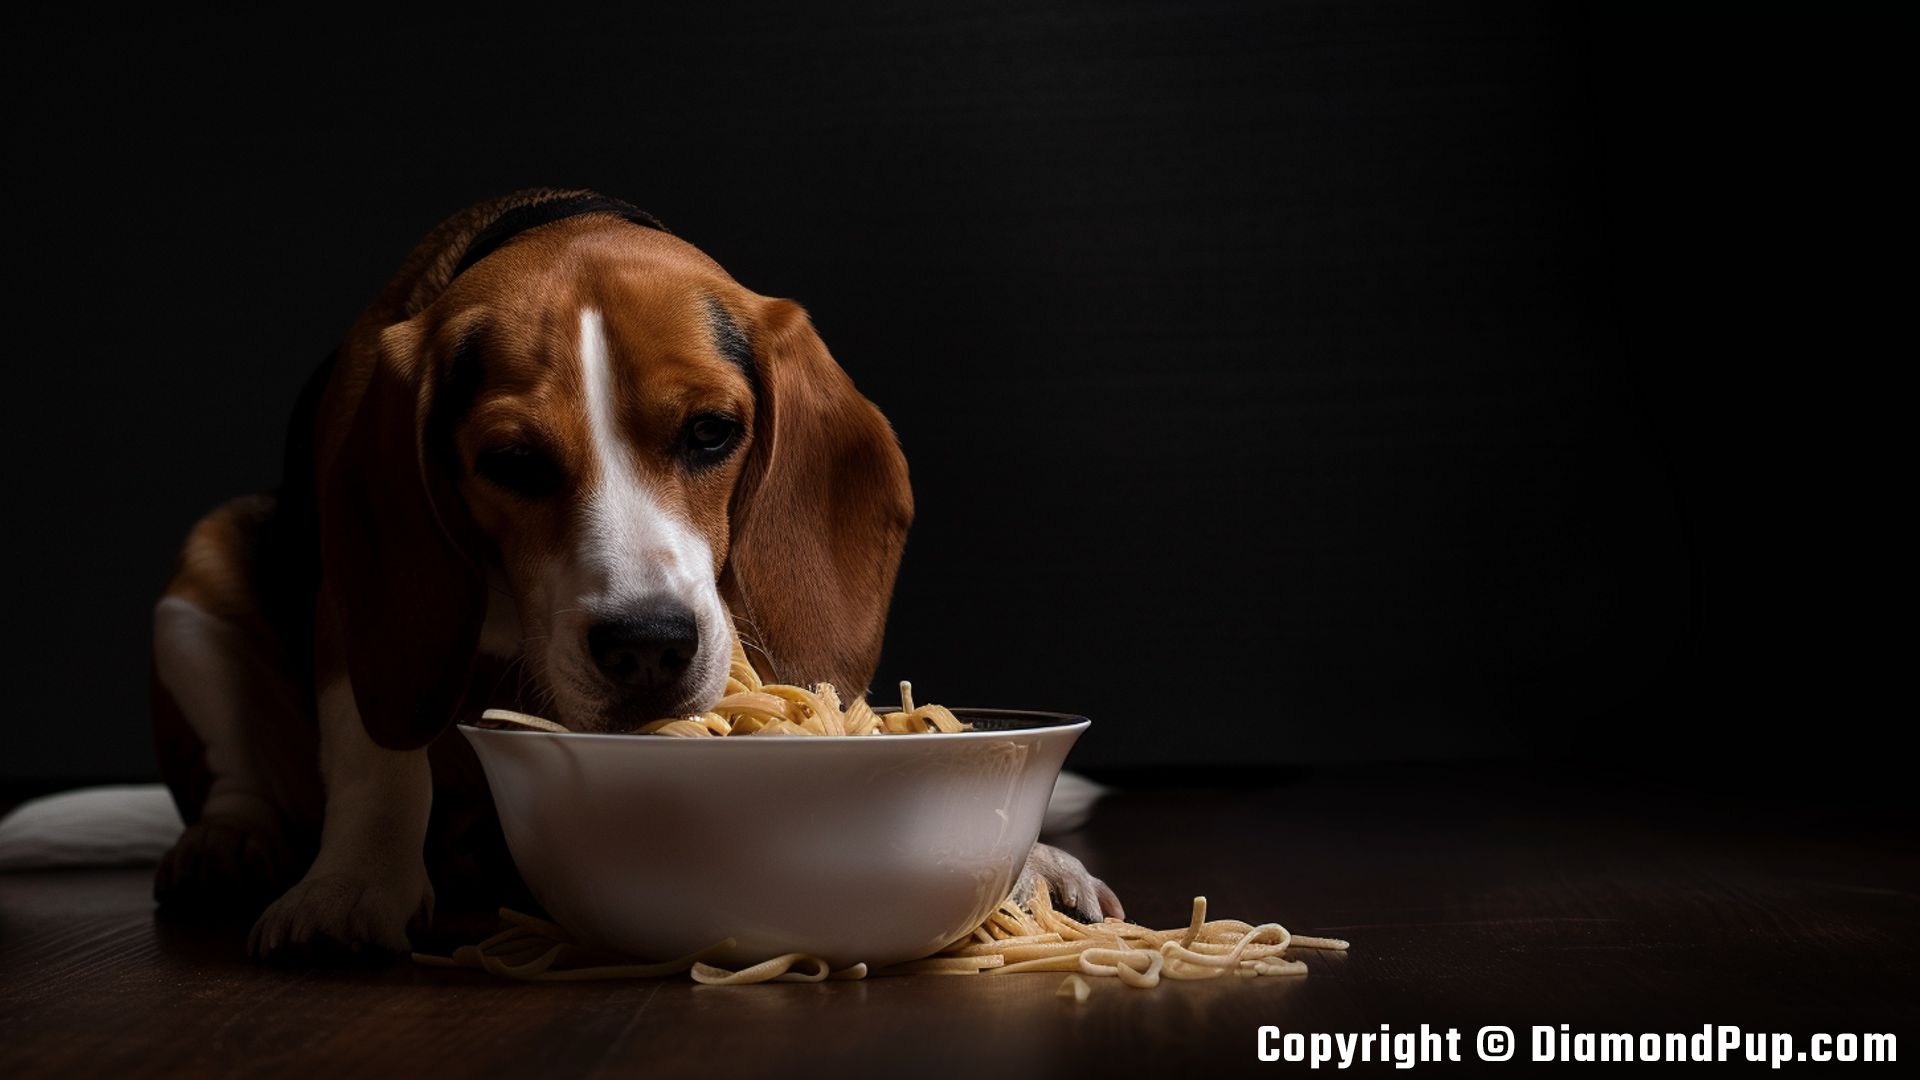 Photograph of an Adorable Beagle Eating Pasta